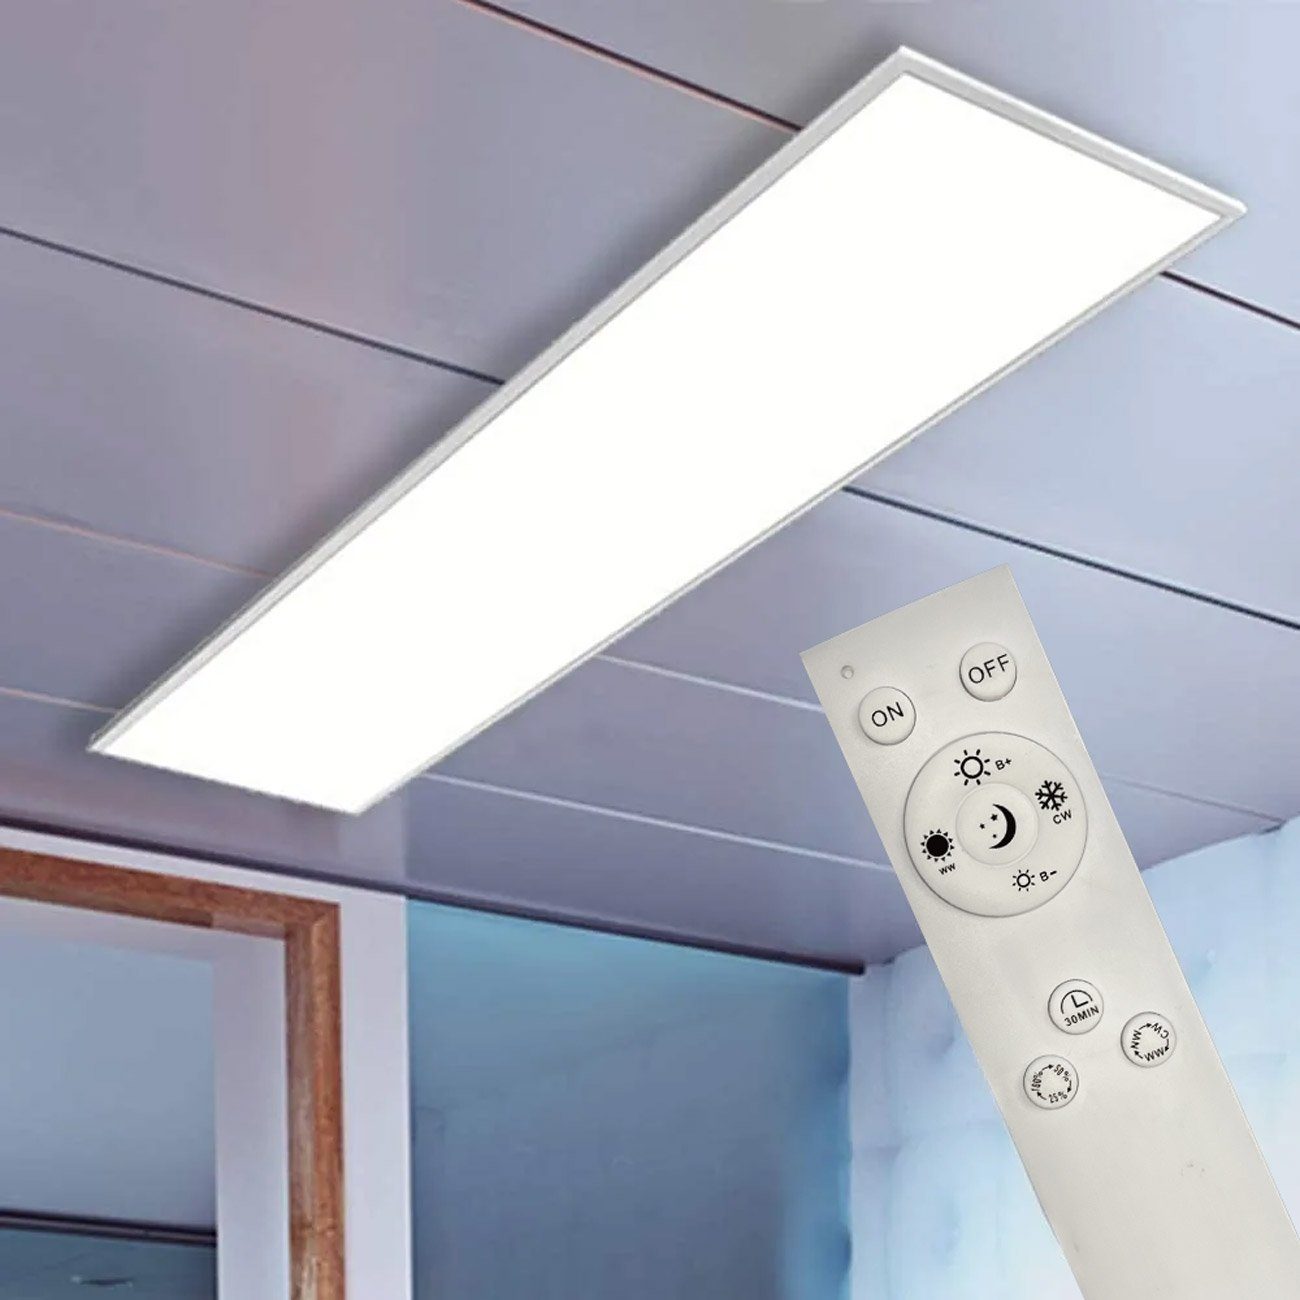 LED dimmbar, 90cm, Neutralweiß, Hängeleuchte, LED Panel Tageslichtweiß, 4320lm, Licht integriert, mit Panel Pendelleuchte, TEUTO LED Büroleuchte fest Warmweiß, Fernbedienung, Deckenleuchte, LED LED LED 0-42W, LED